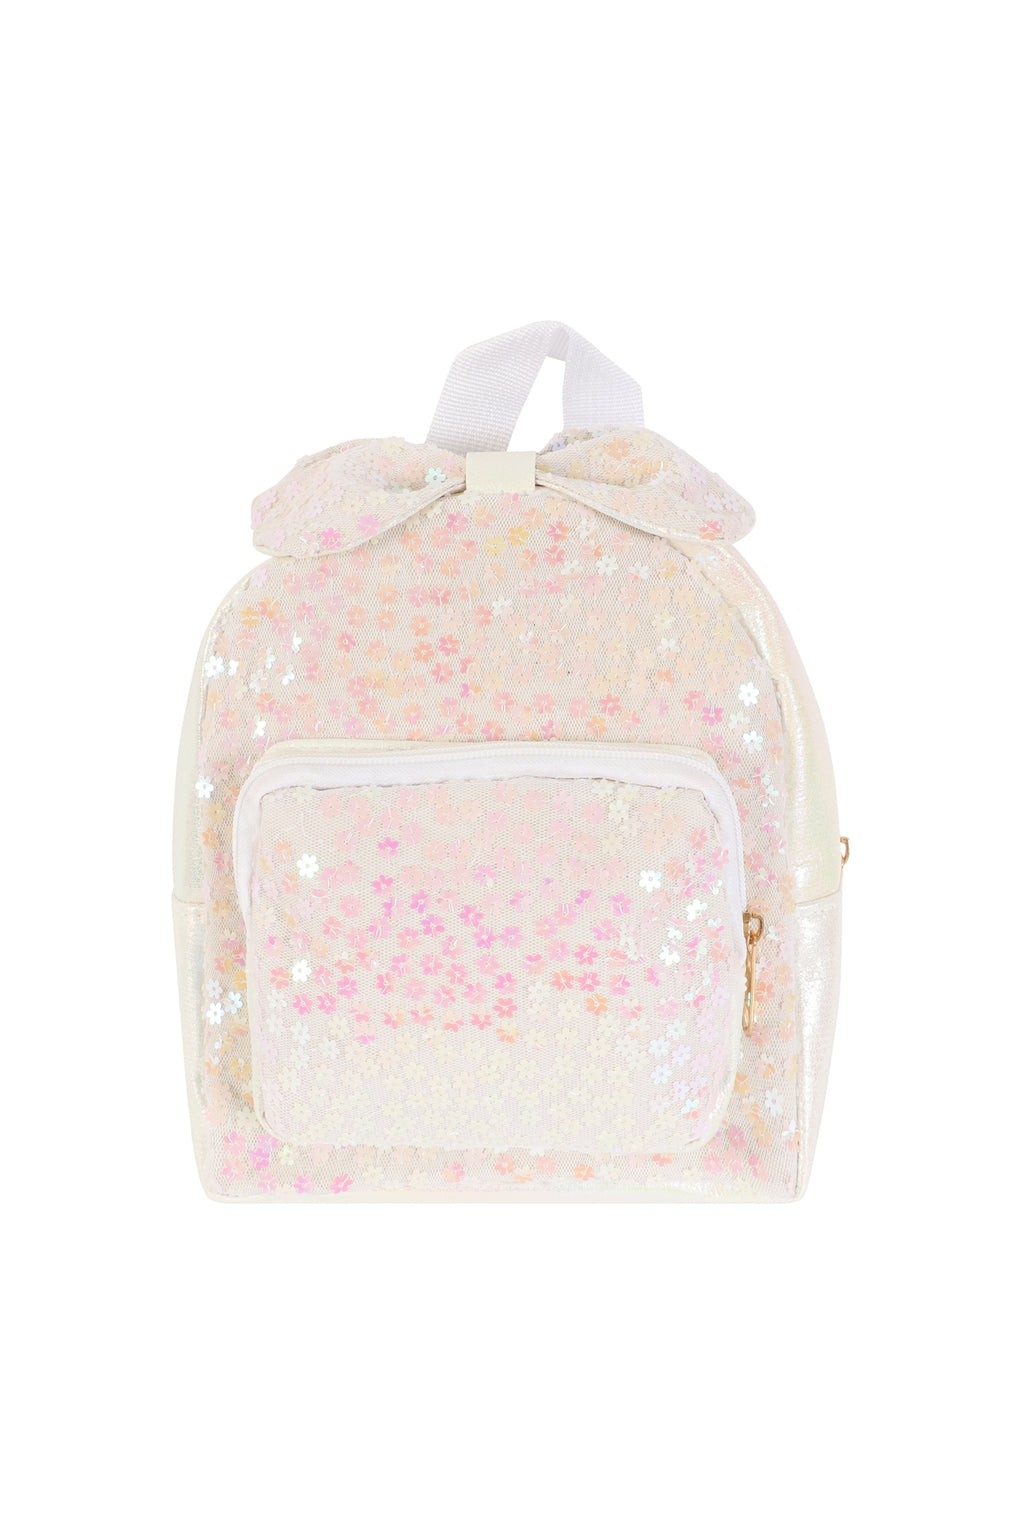 Cute Bow Glitter Kids Backpack White - Pack of 6